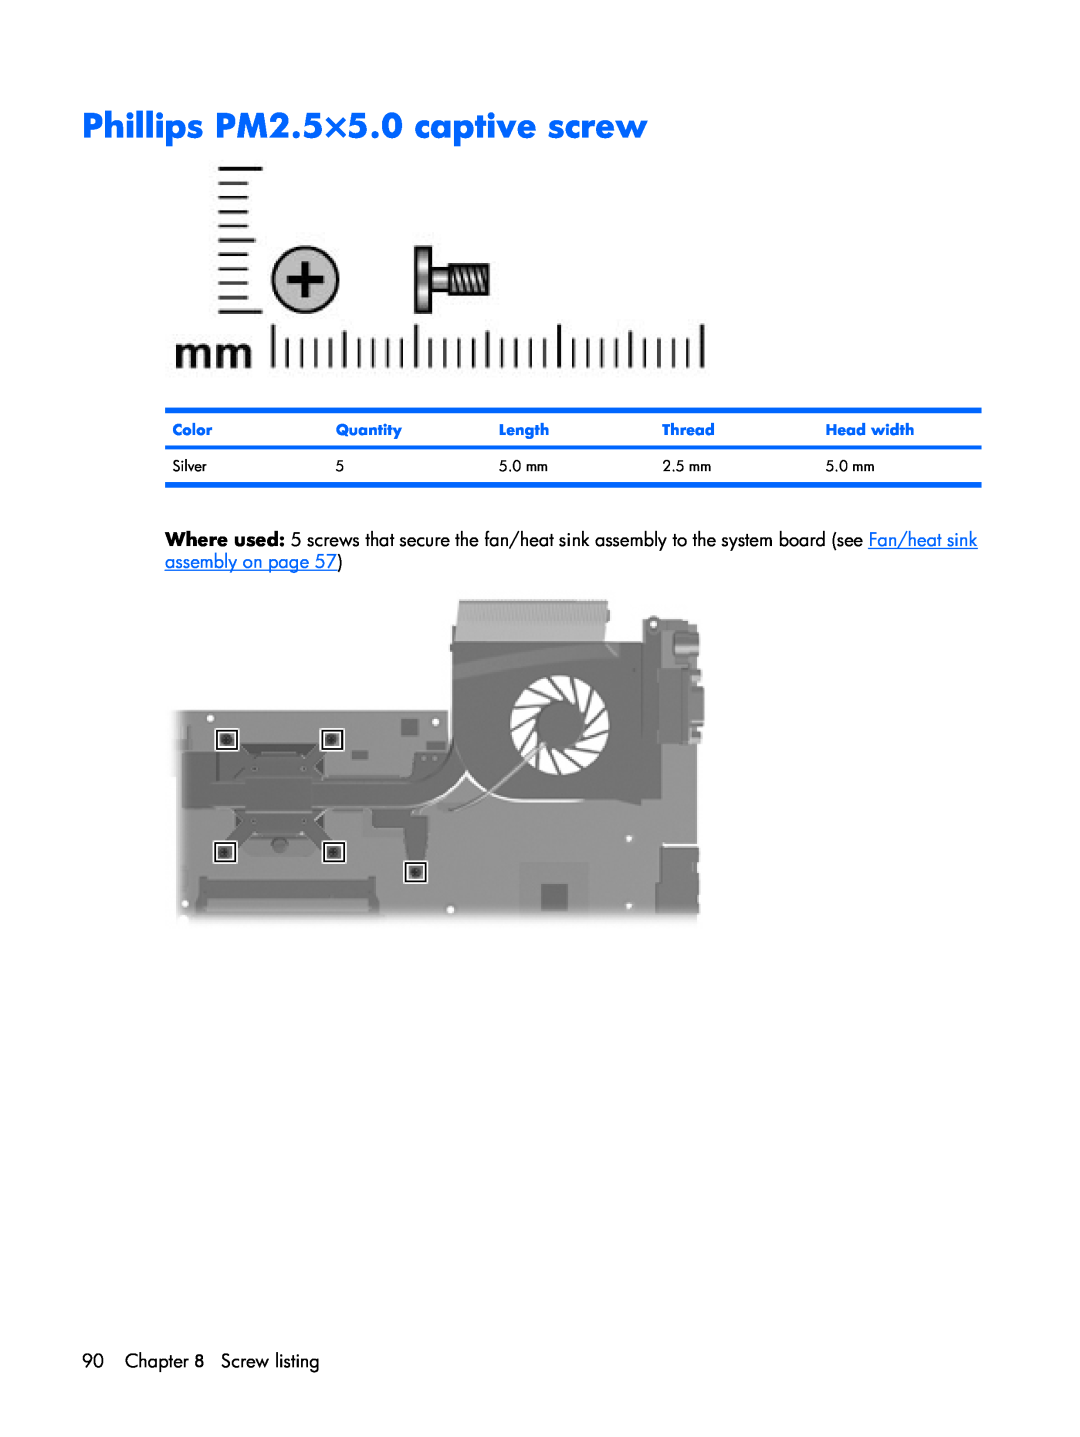 Compaq F500 manual Phillips PM2.5×5.0 captive screw, Color, Quantity, Length, Thread, Head width, Silver, 5.0 mm, 2.5 mm 